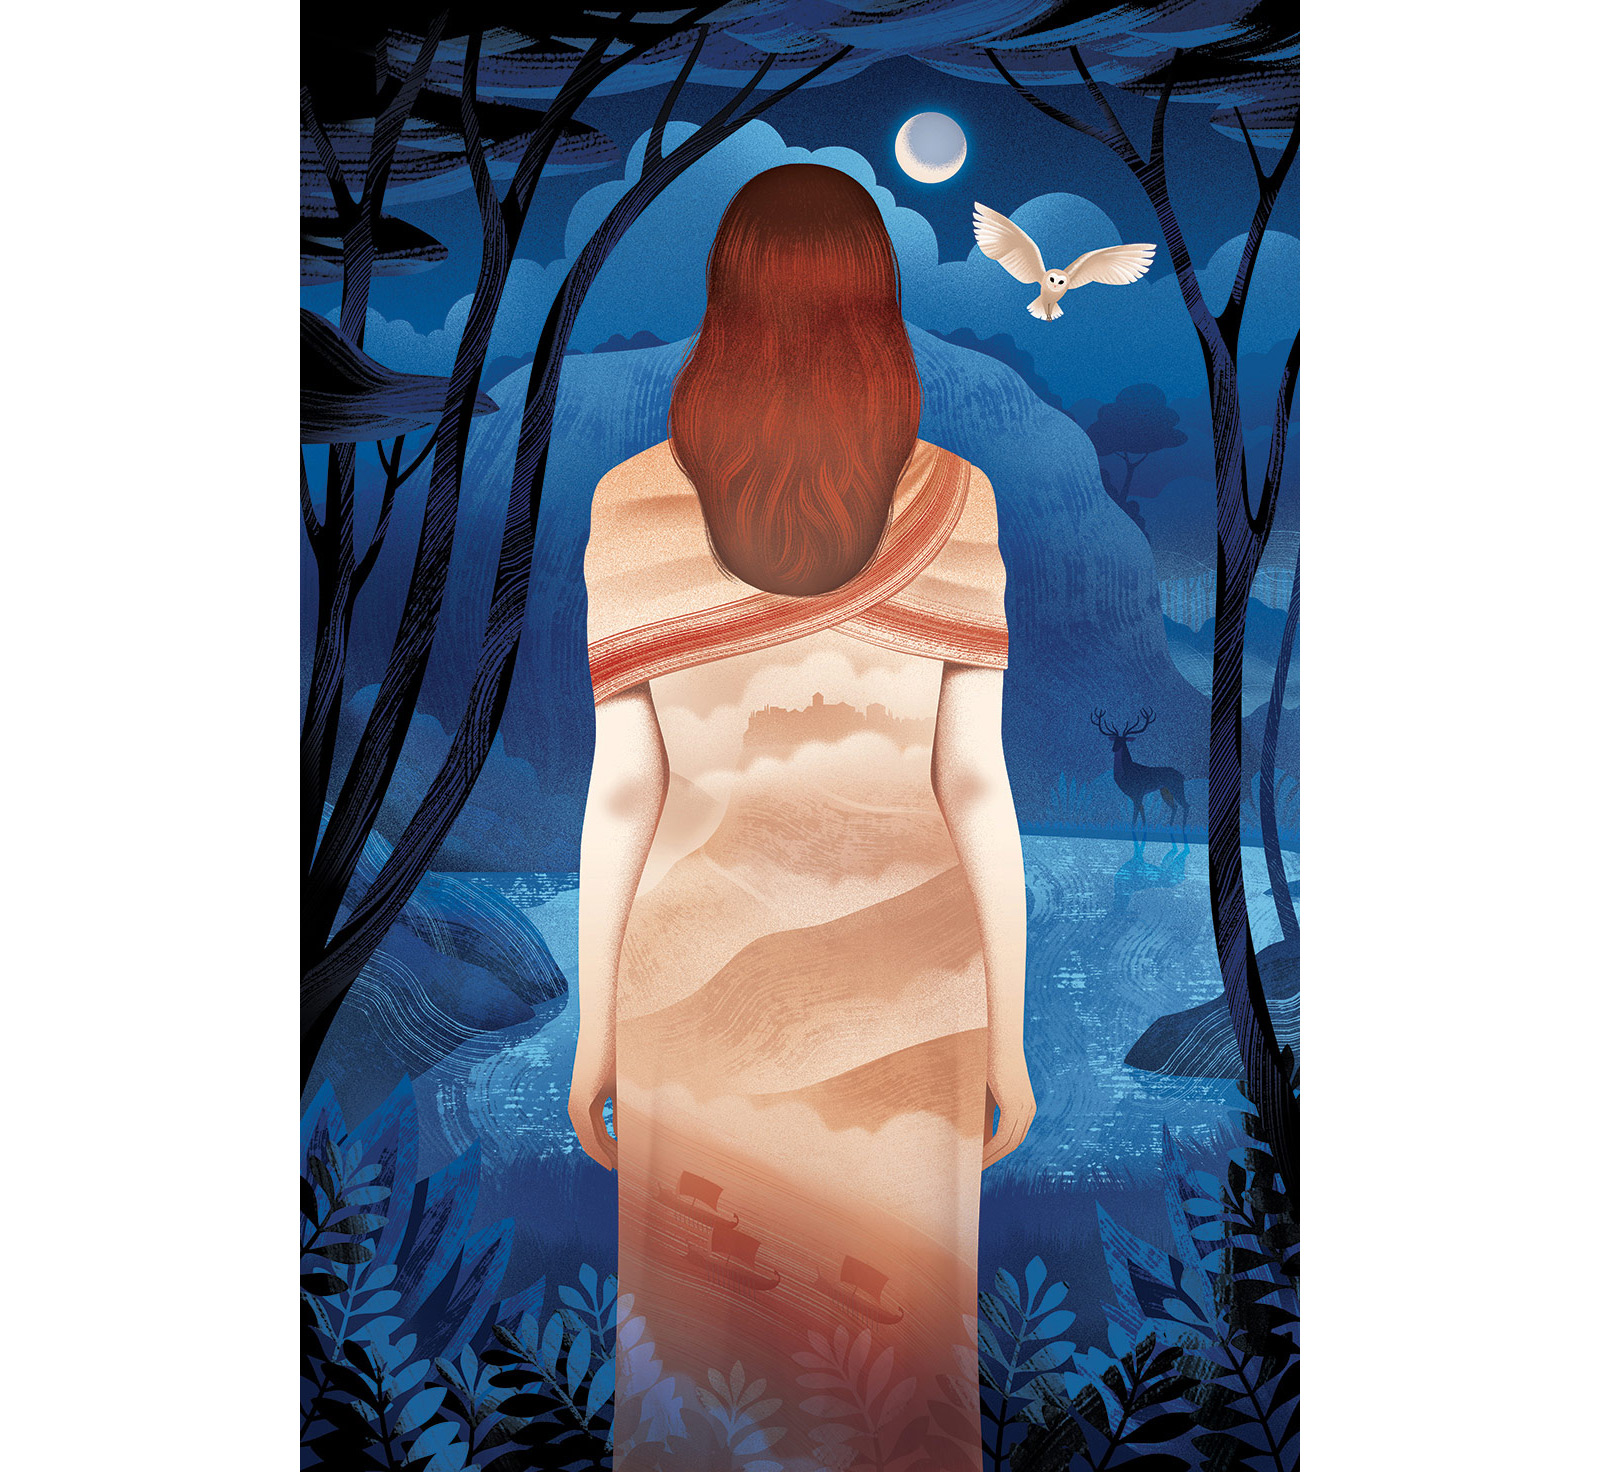 Illustration for Lavinia, by Ursula Le Guin